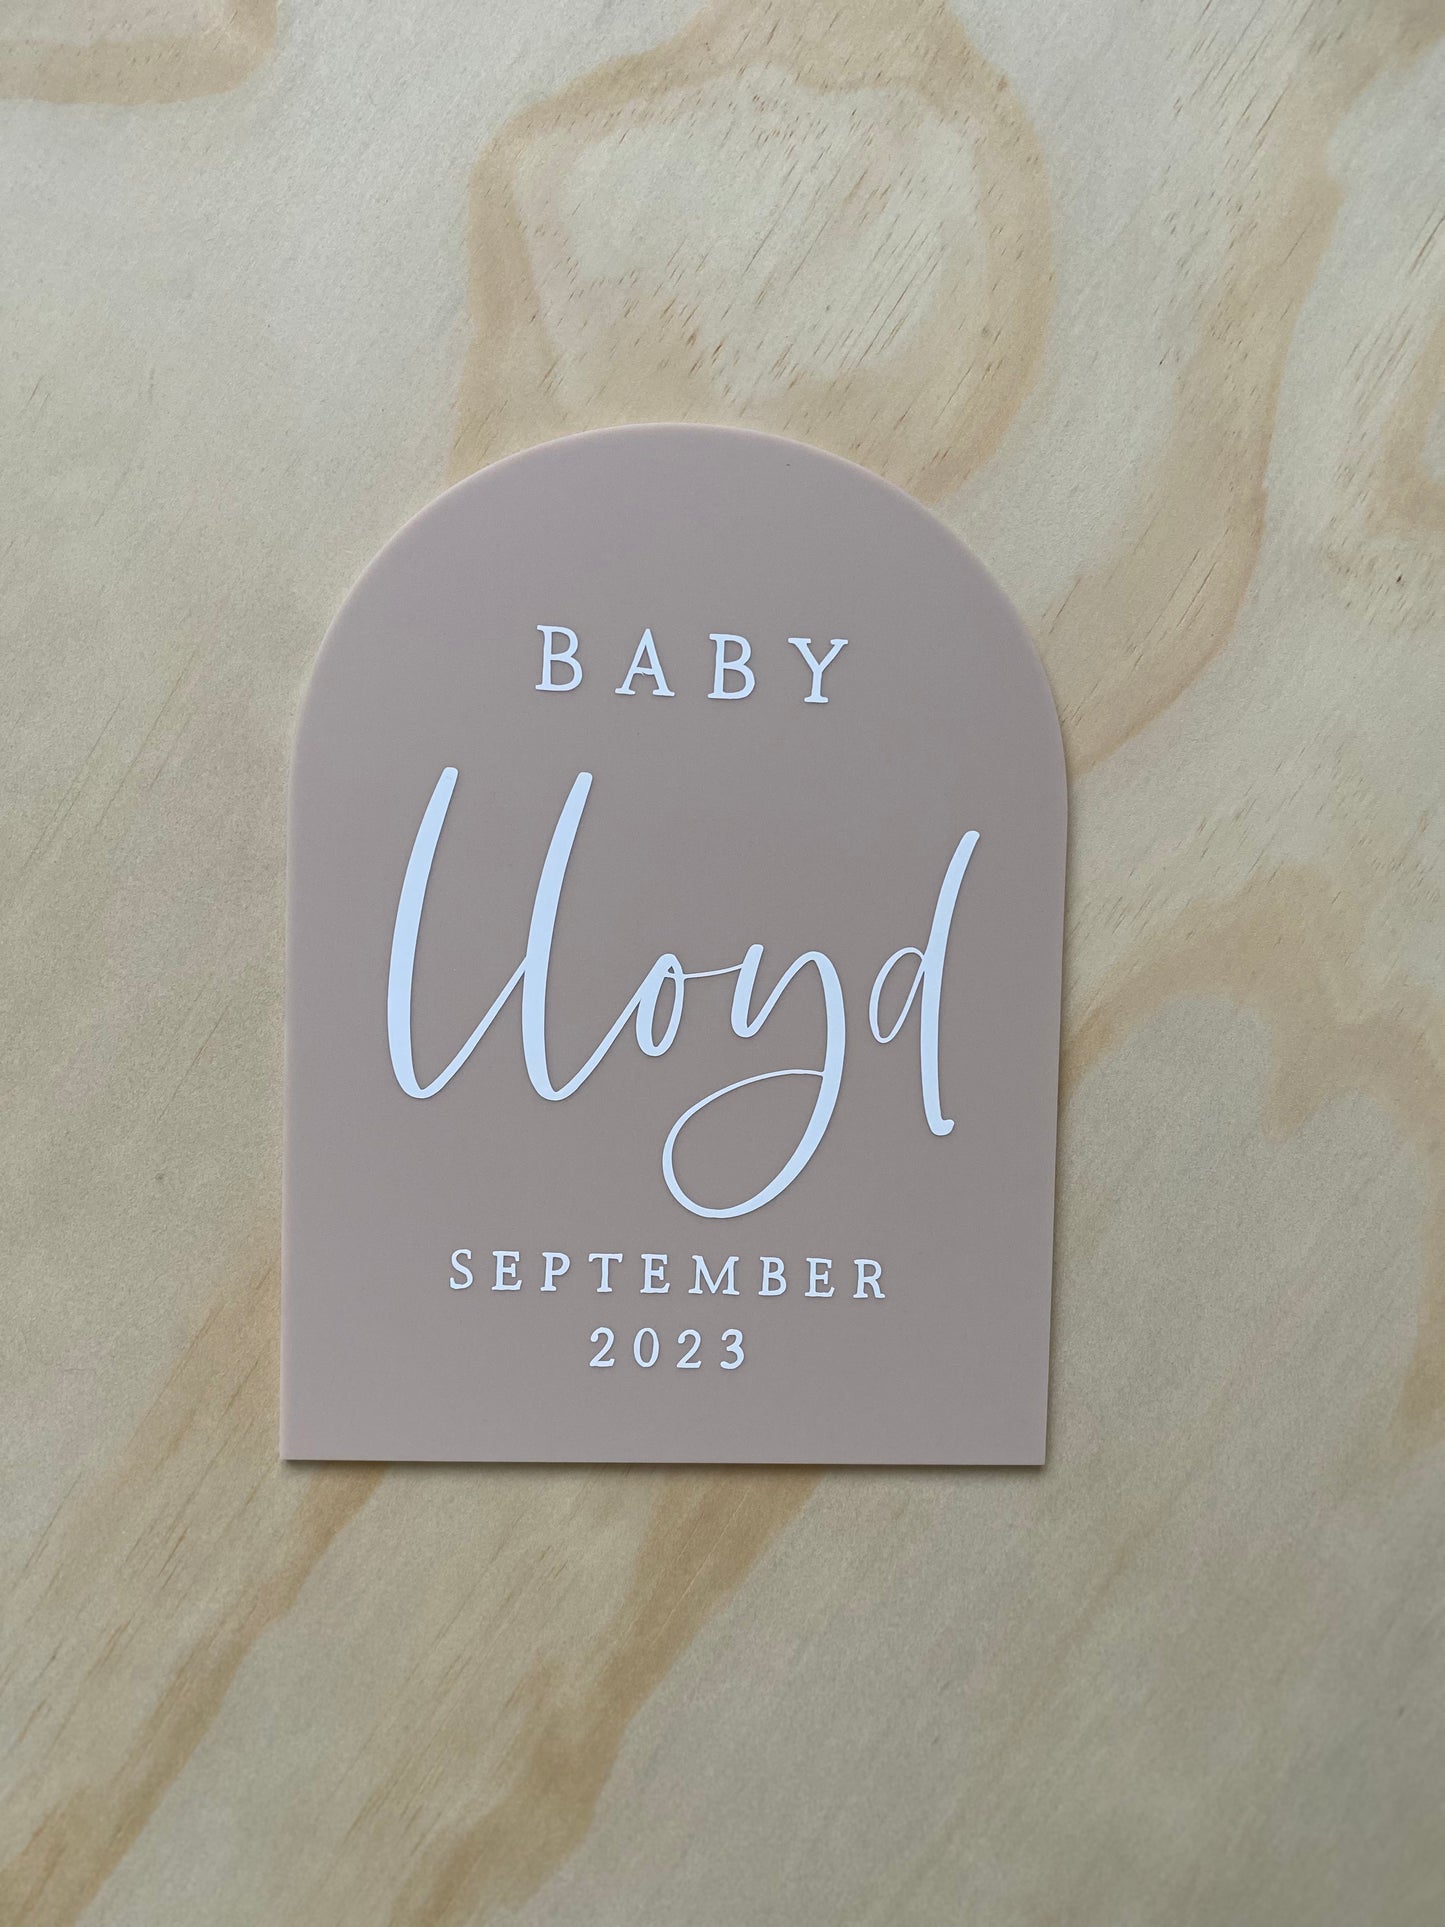 Baby Last Name Announcement Plaque